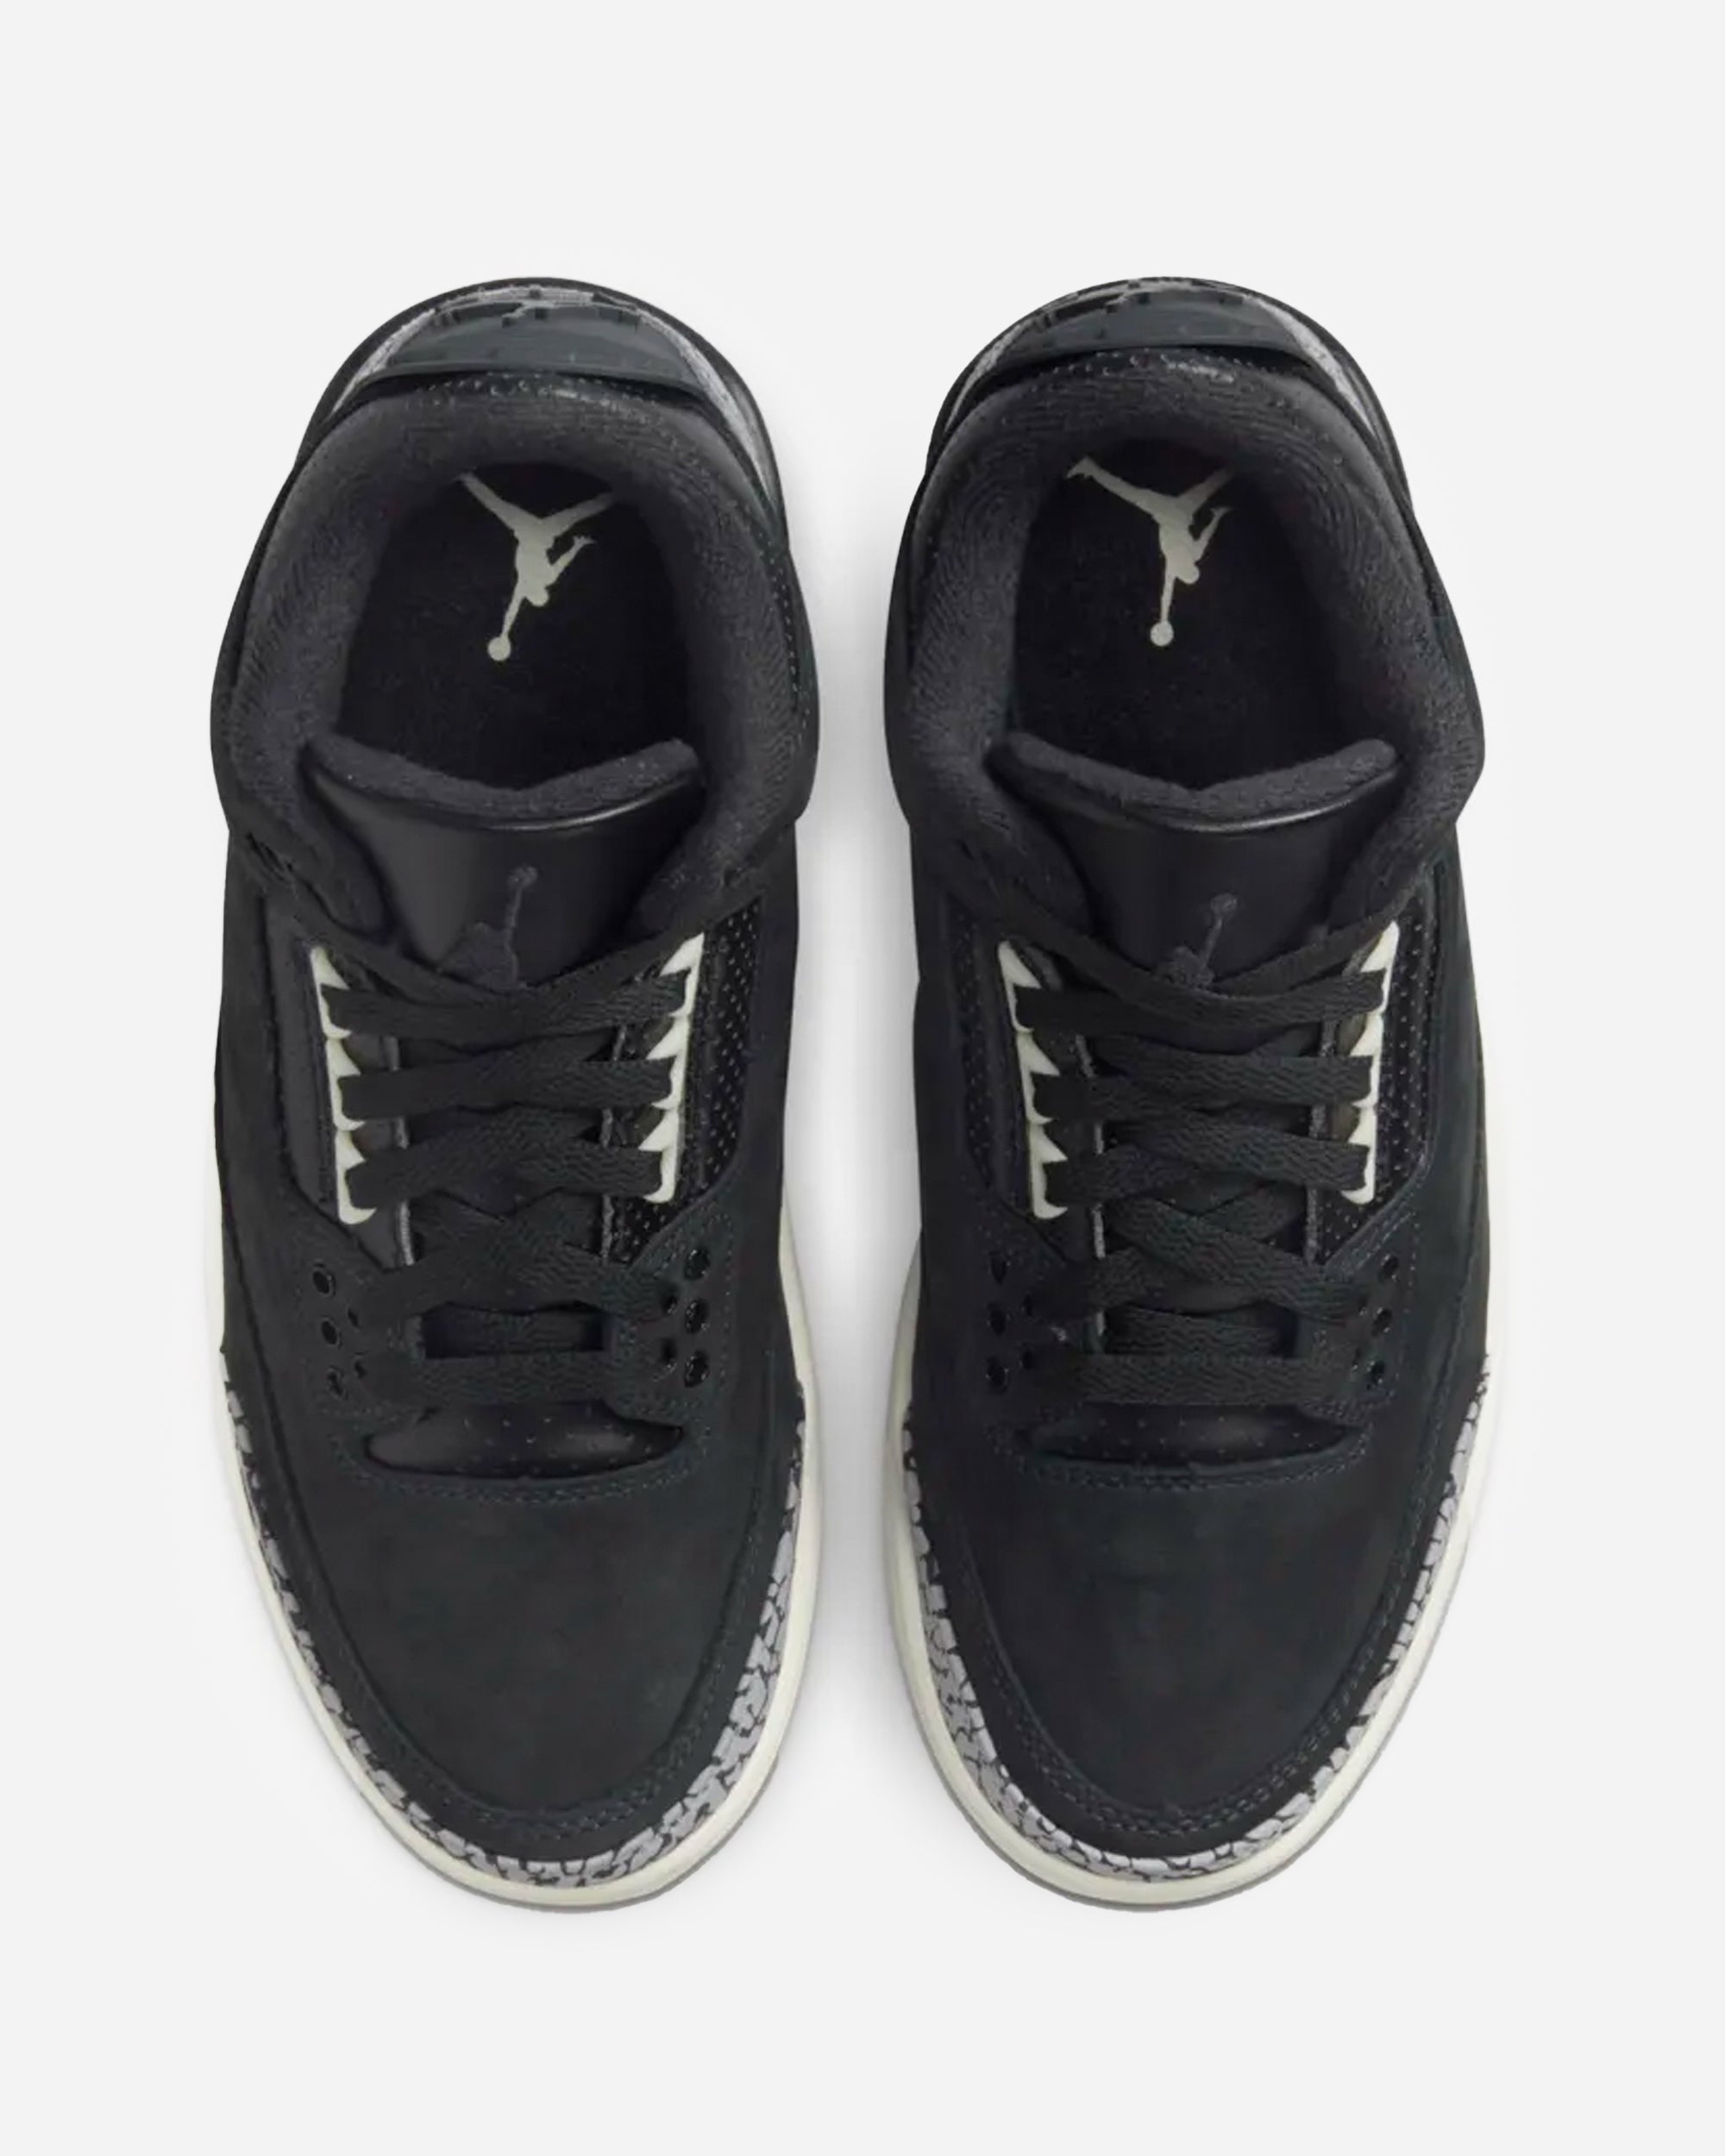 Jordan Brand Air Jordan 3 Retro 'Off Noir' OFF NOIR/BLACK-CEMENT GREY CK9246-001